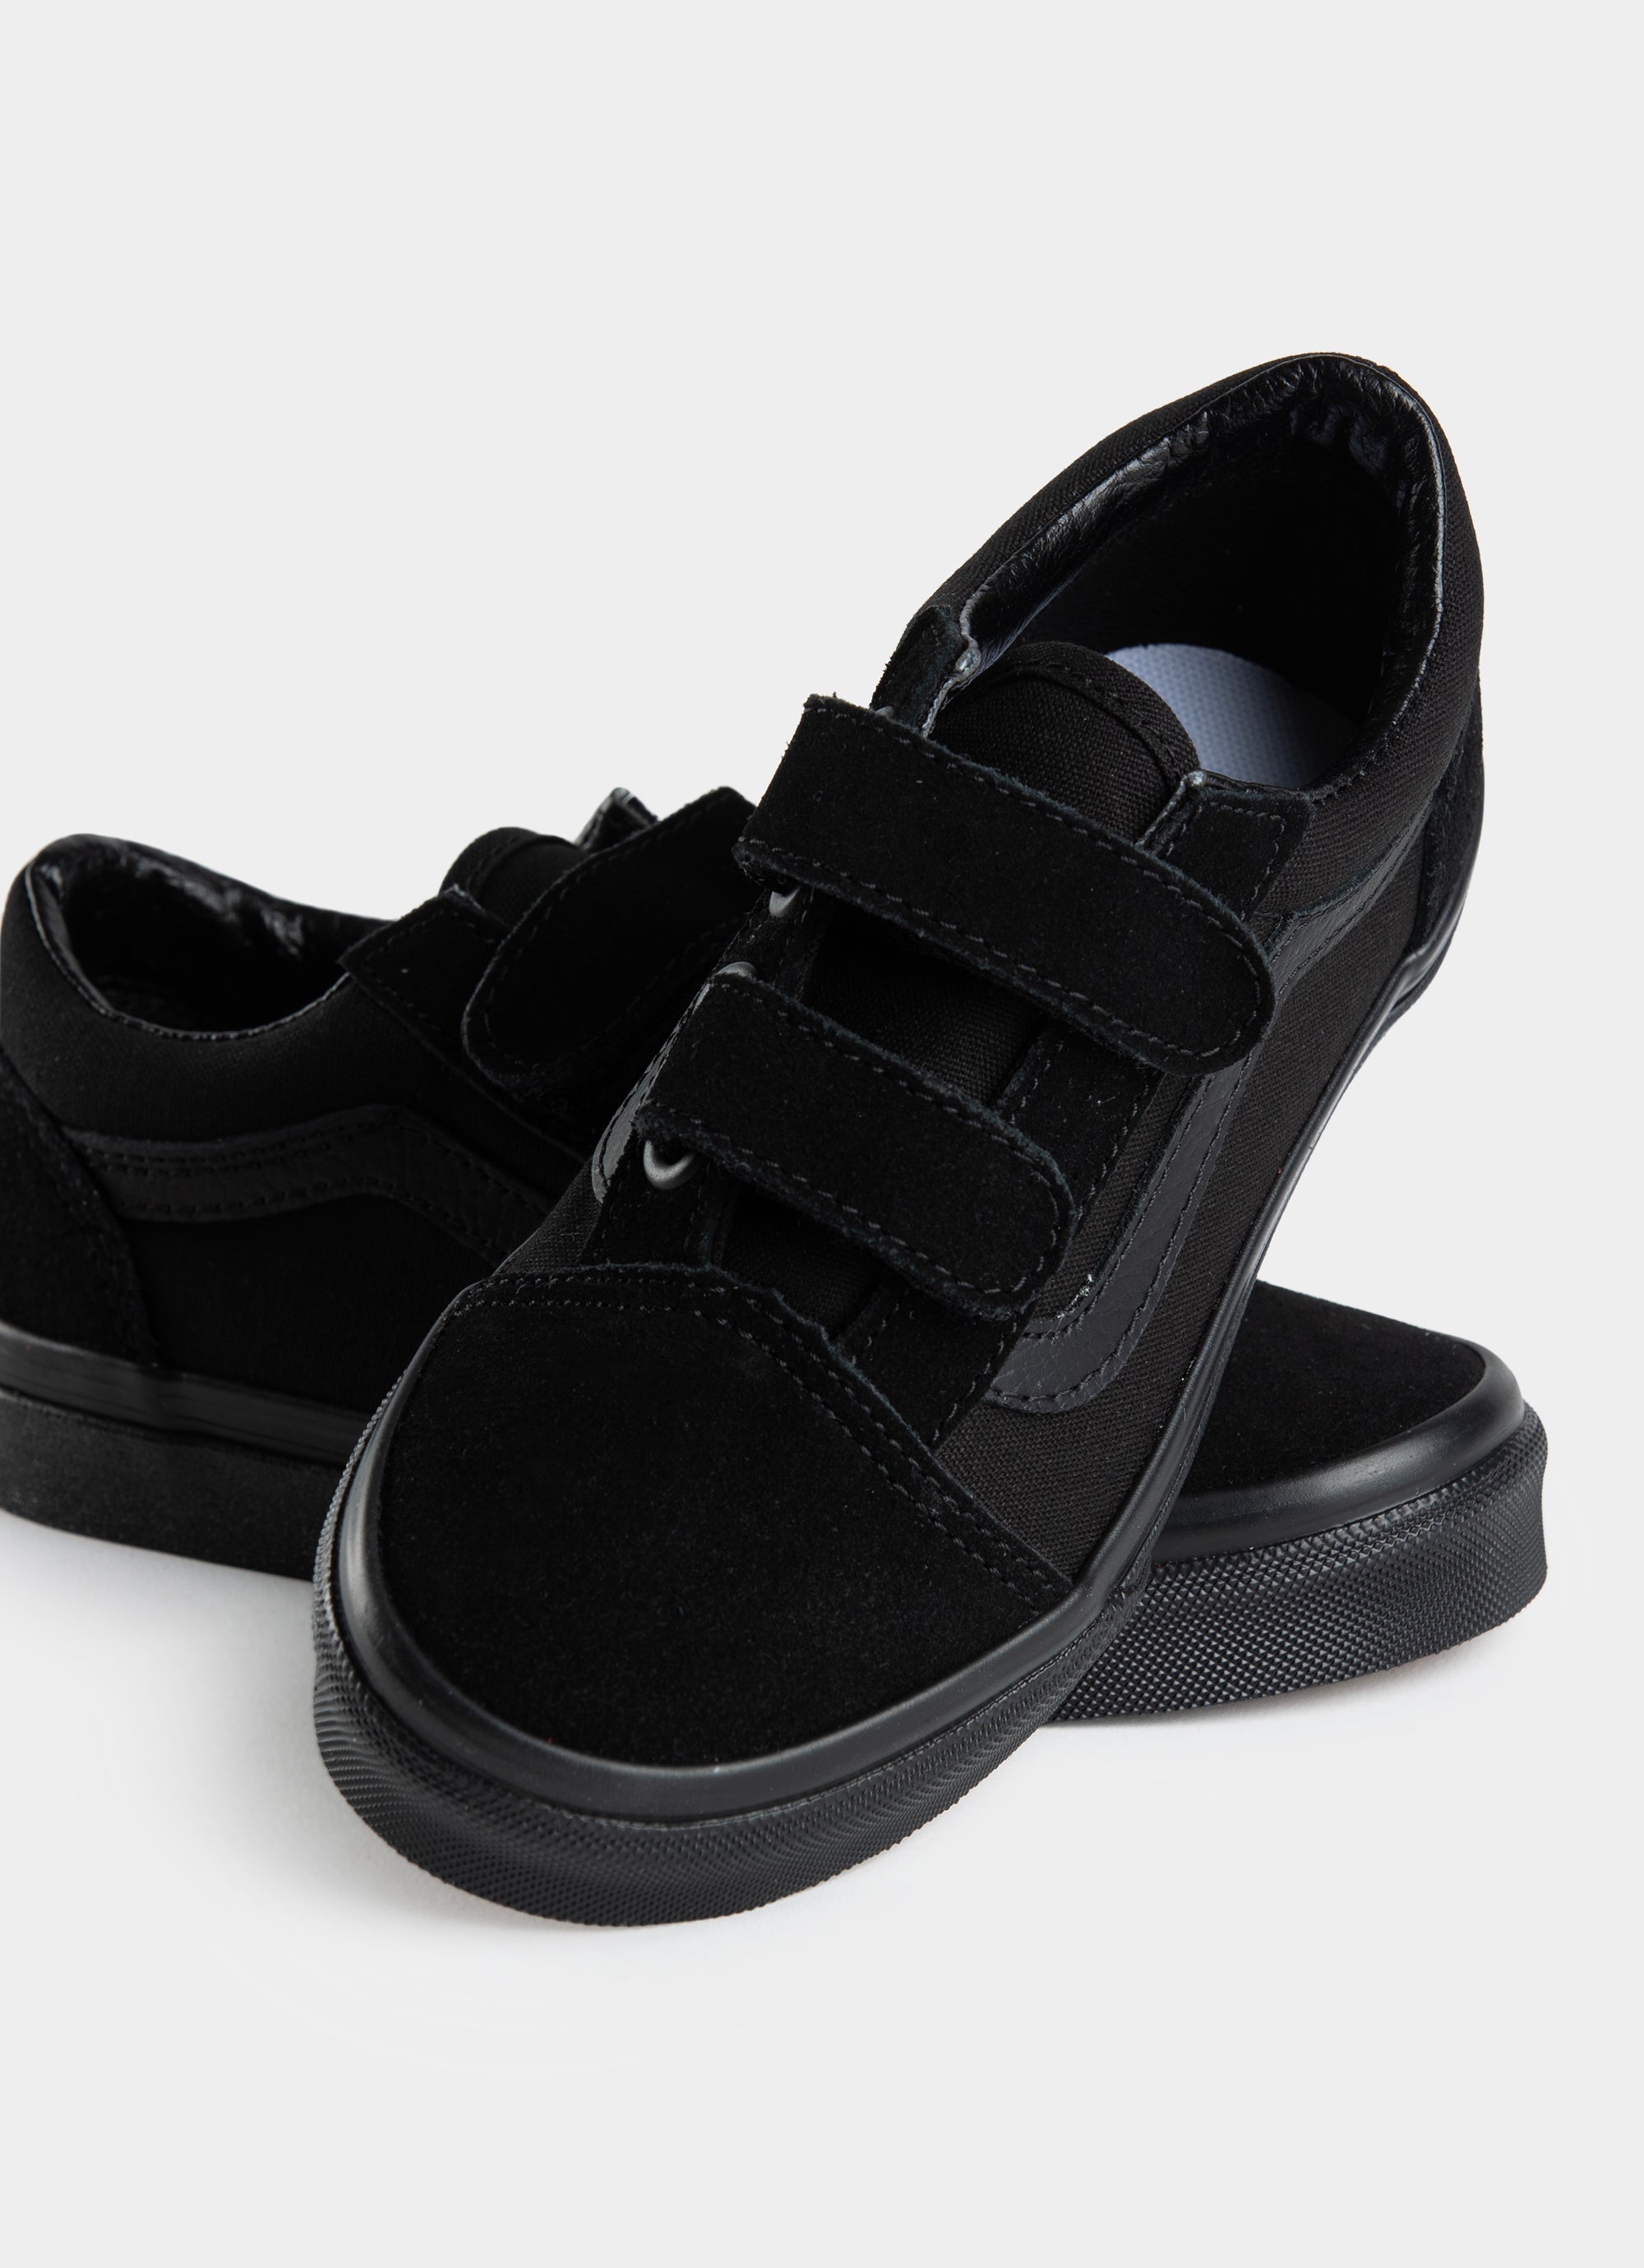 ALDO Men's Esal U Studded High Top Velcro Black Sneakers 10 | Black sneakers,  All black sneakers, Sneakers